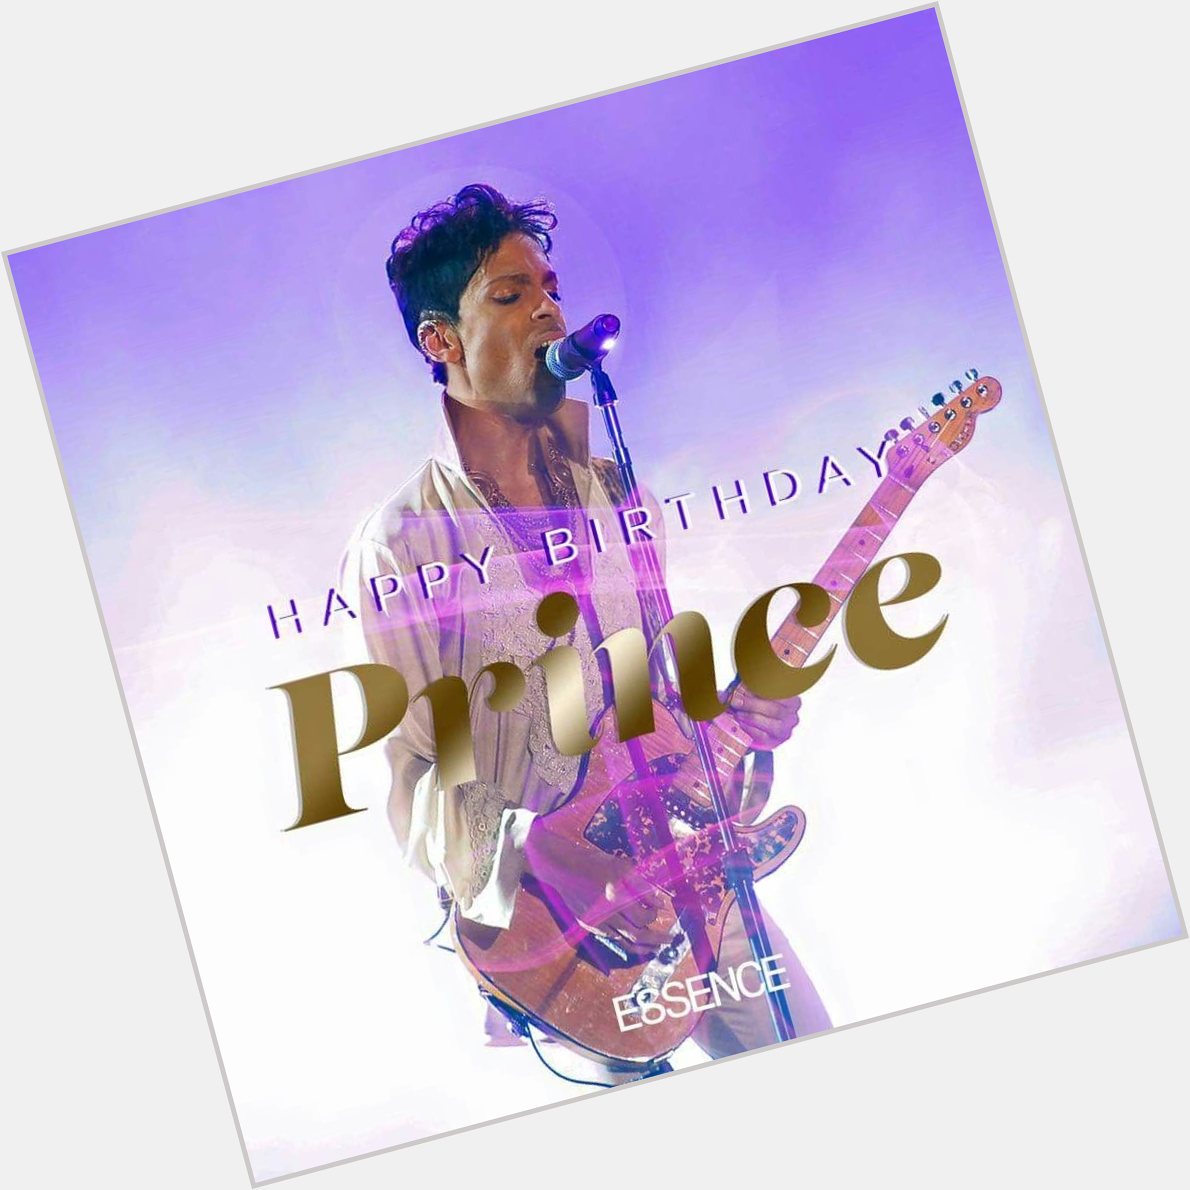  Happy Birthday Prince      